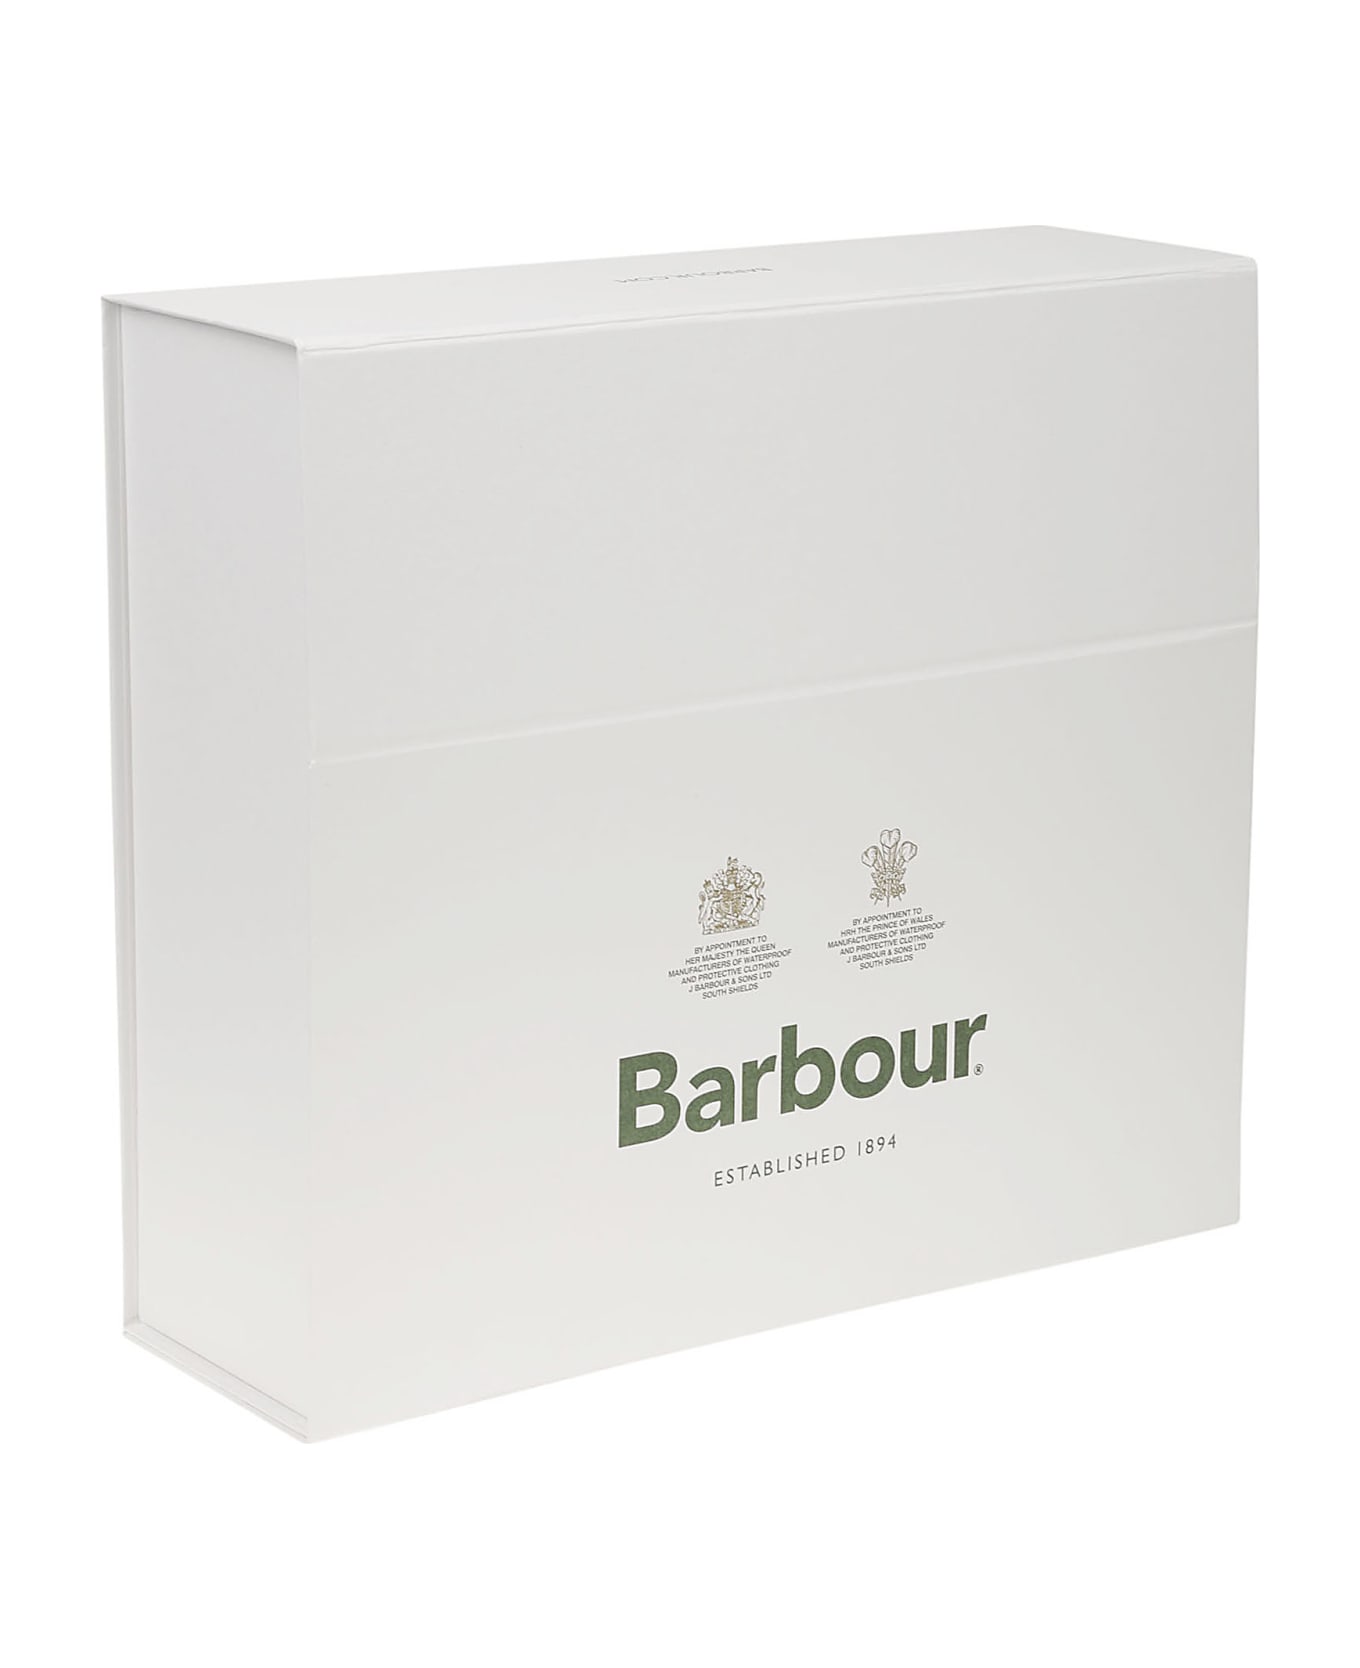 Barbour Ridley Beanie Scarf Gift Set - Cream